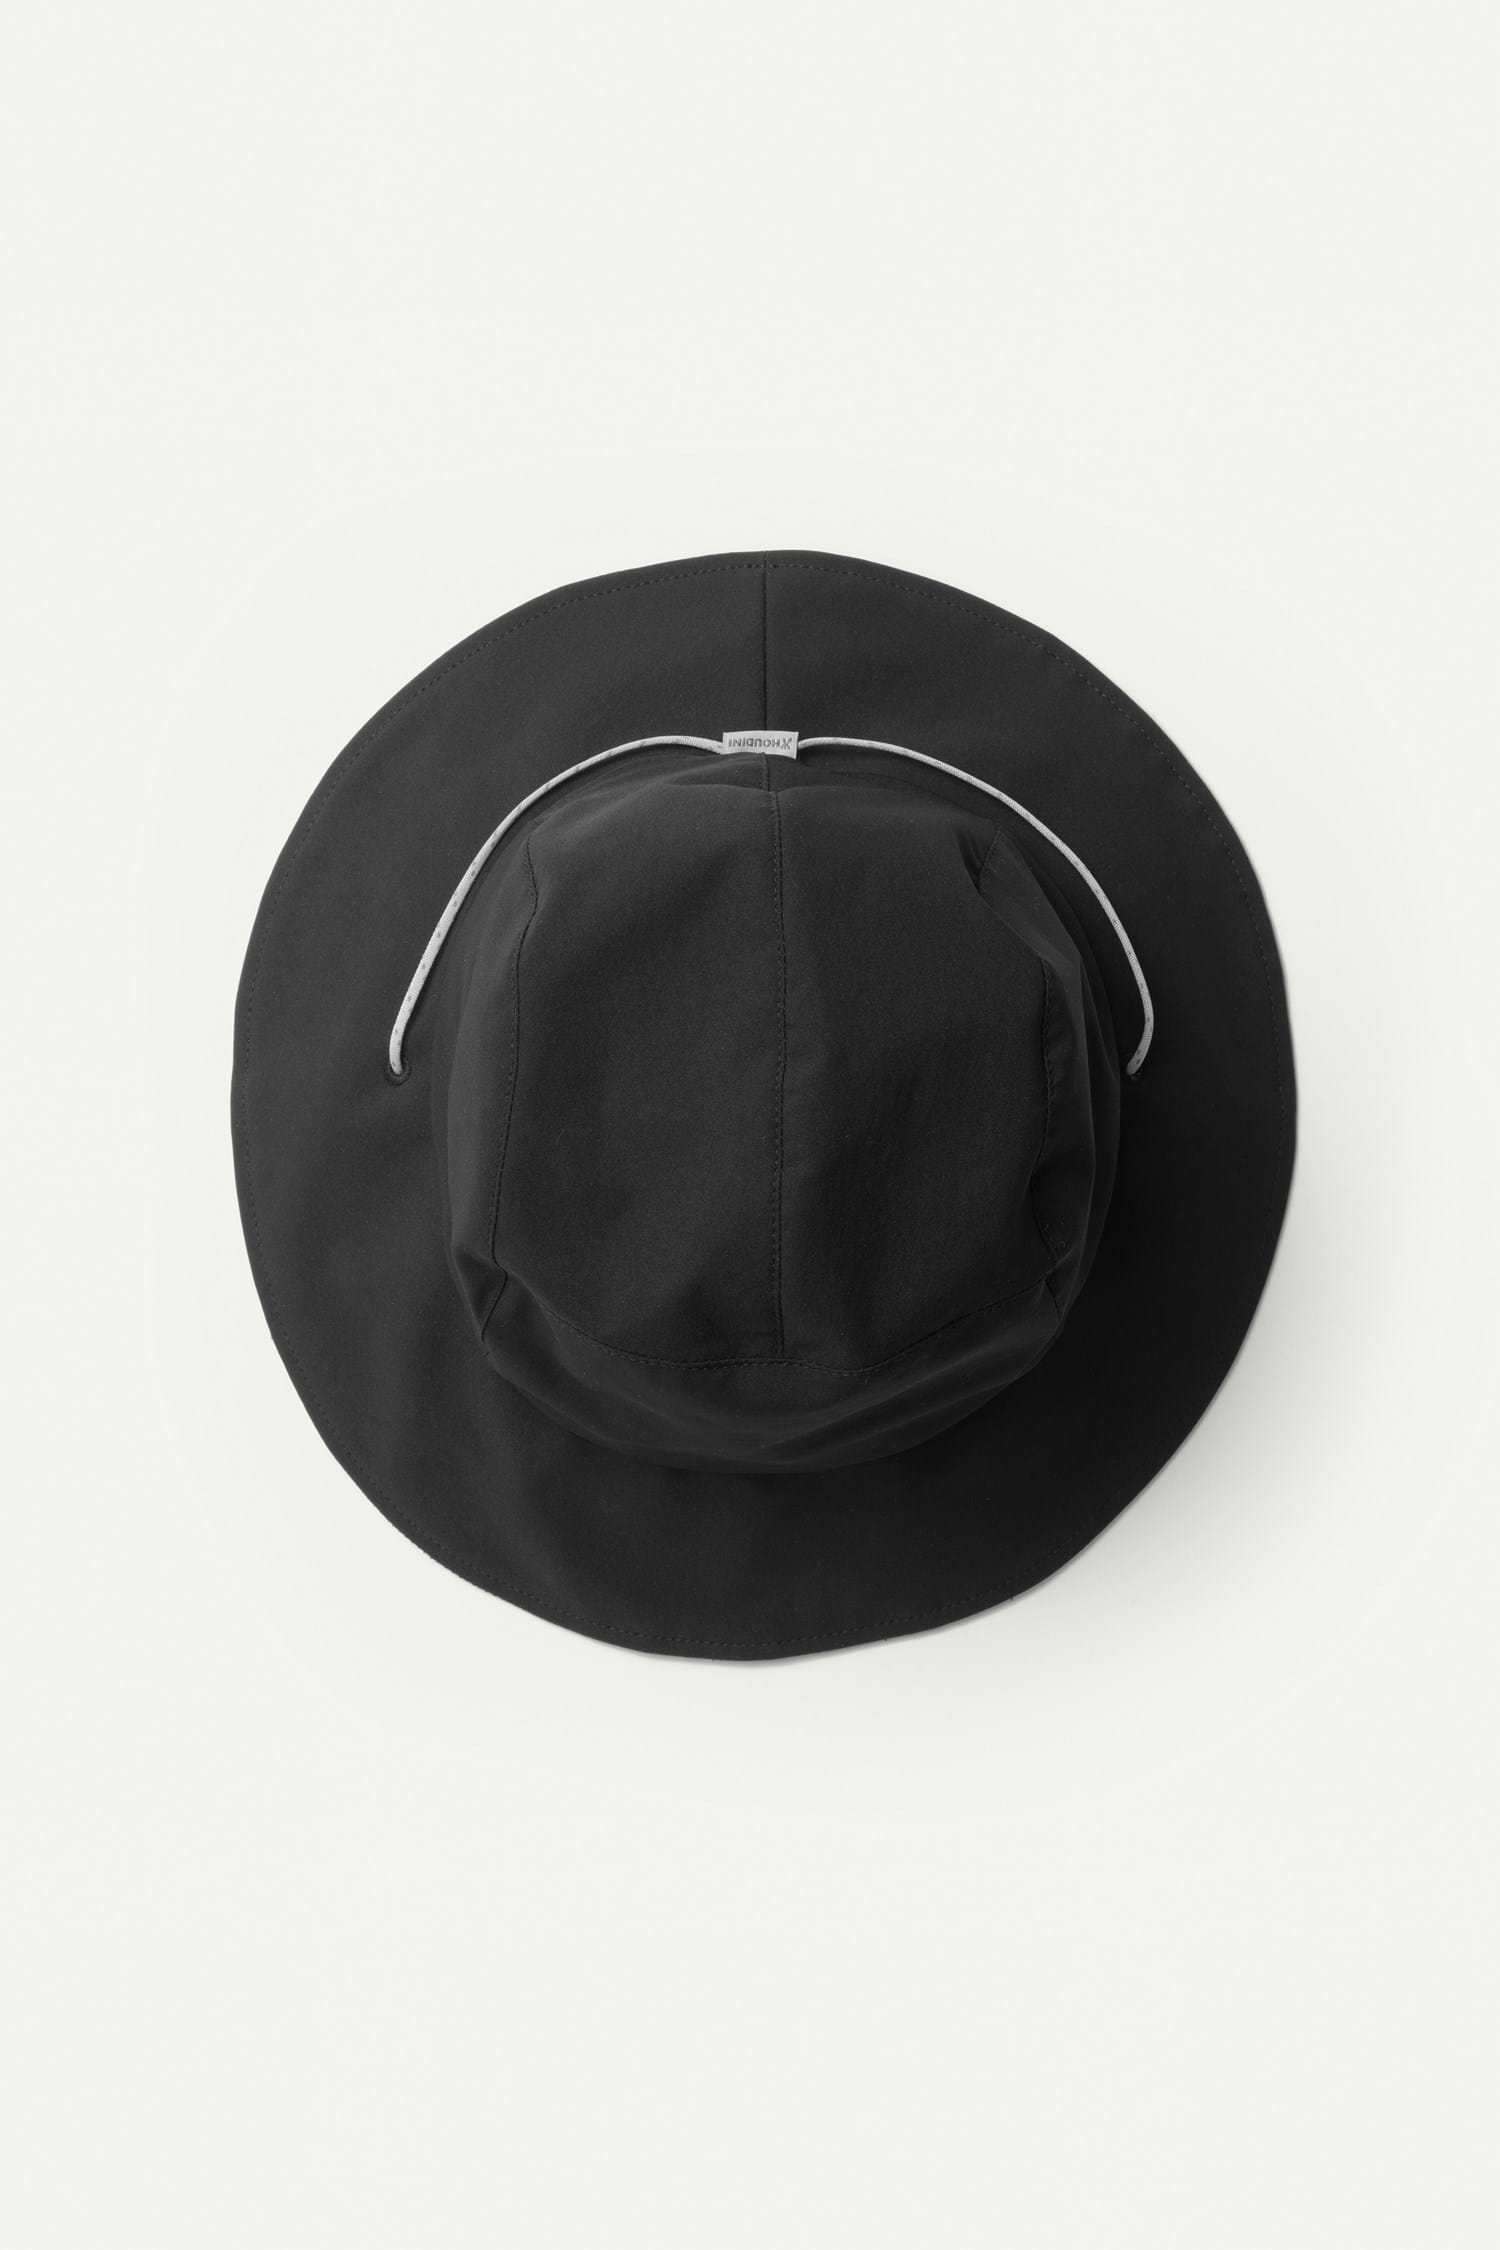 Image of Houdini Gone Fishing Hat, True Black, M/L